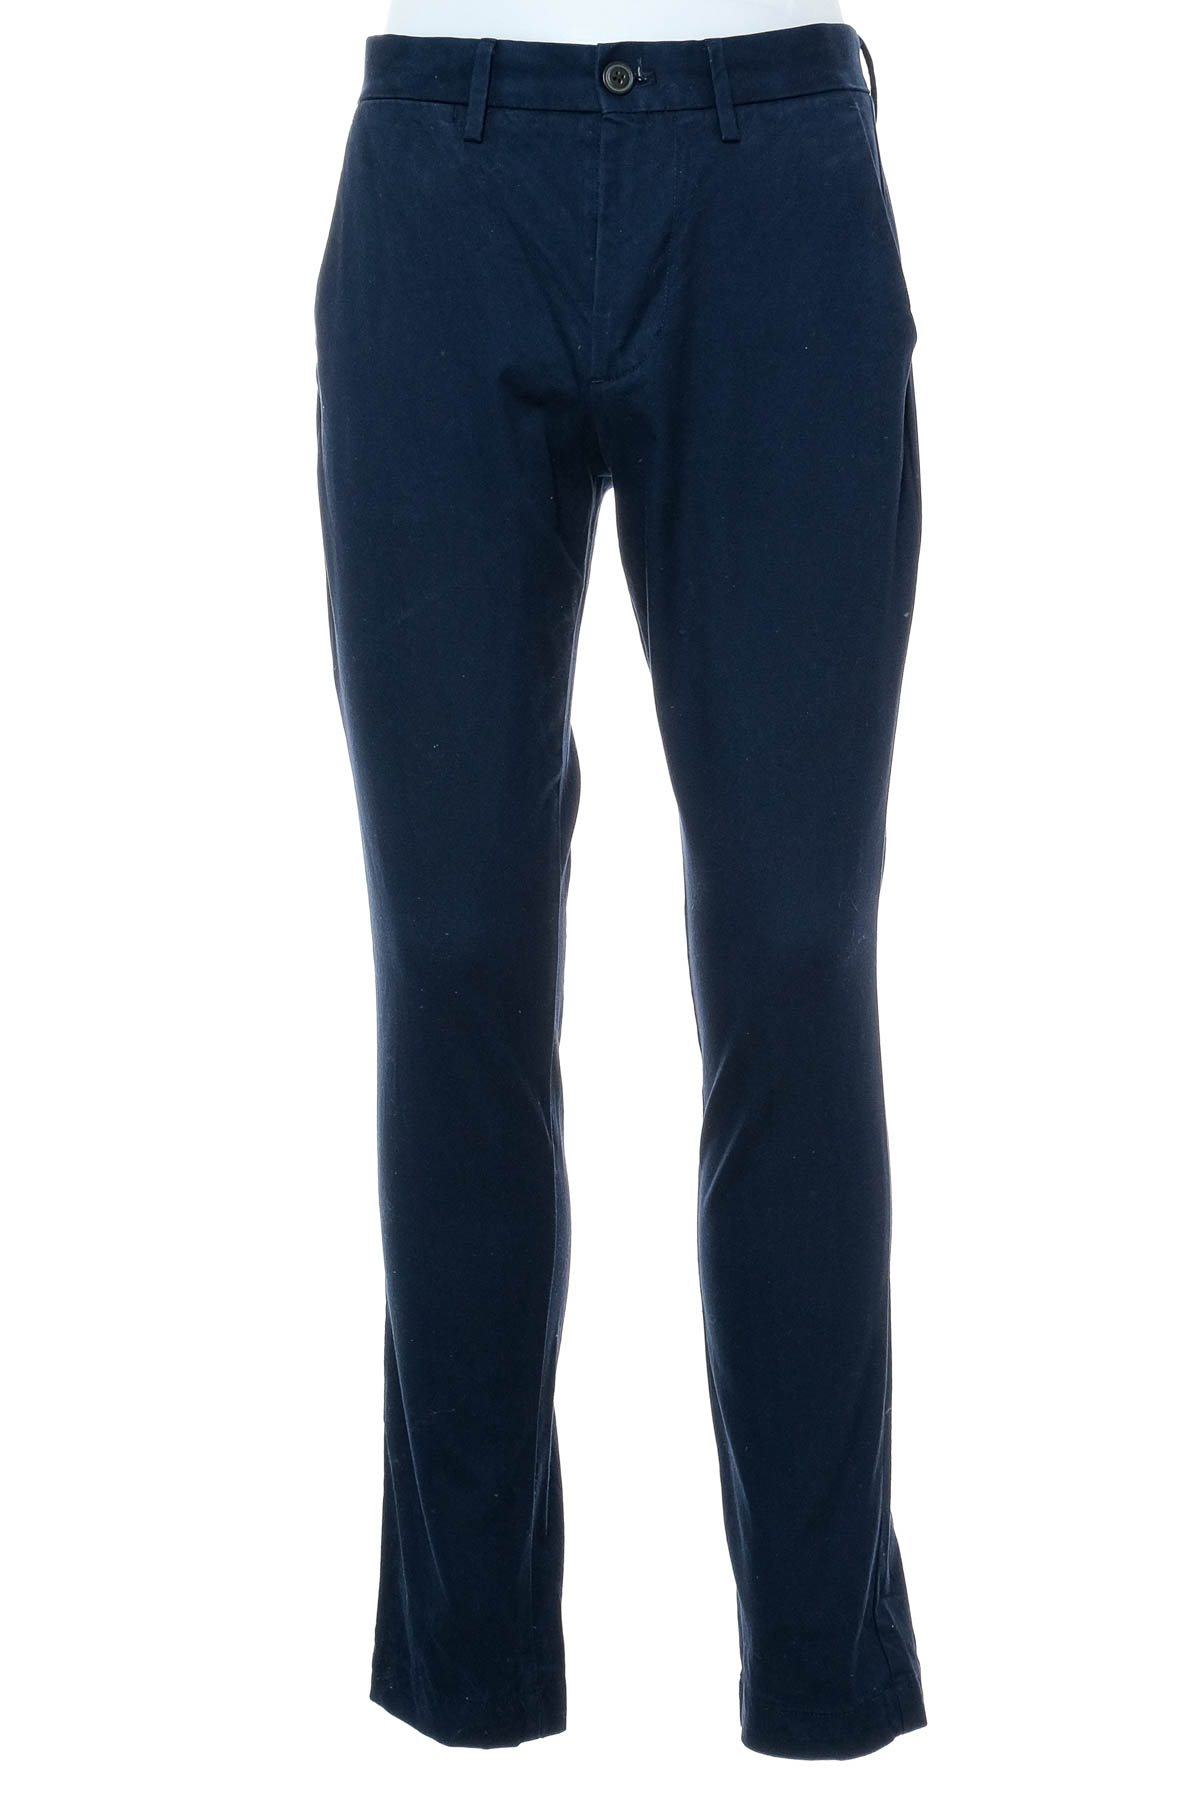 Men's trousers - GAP - 0